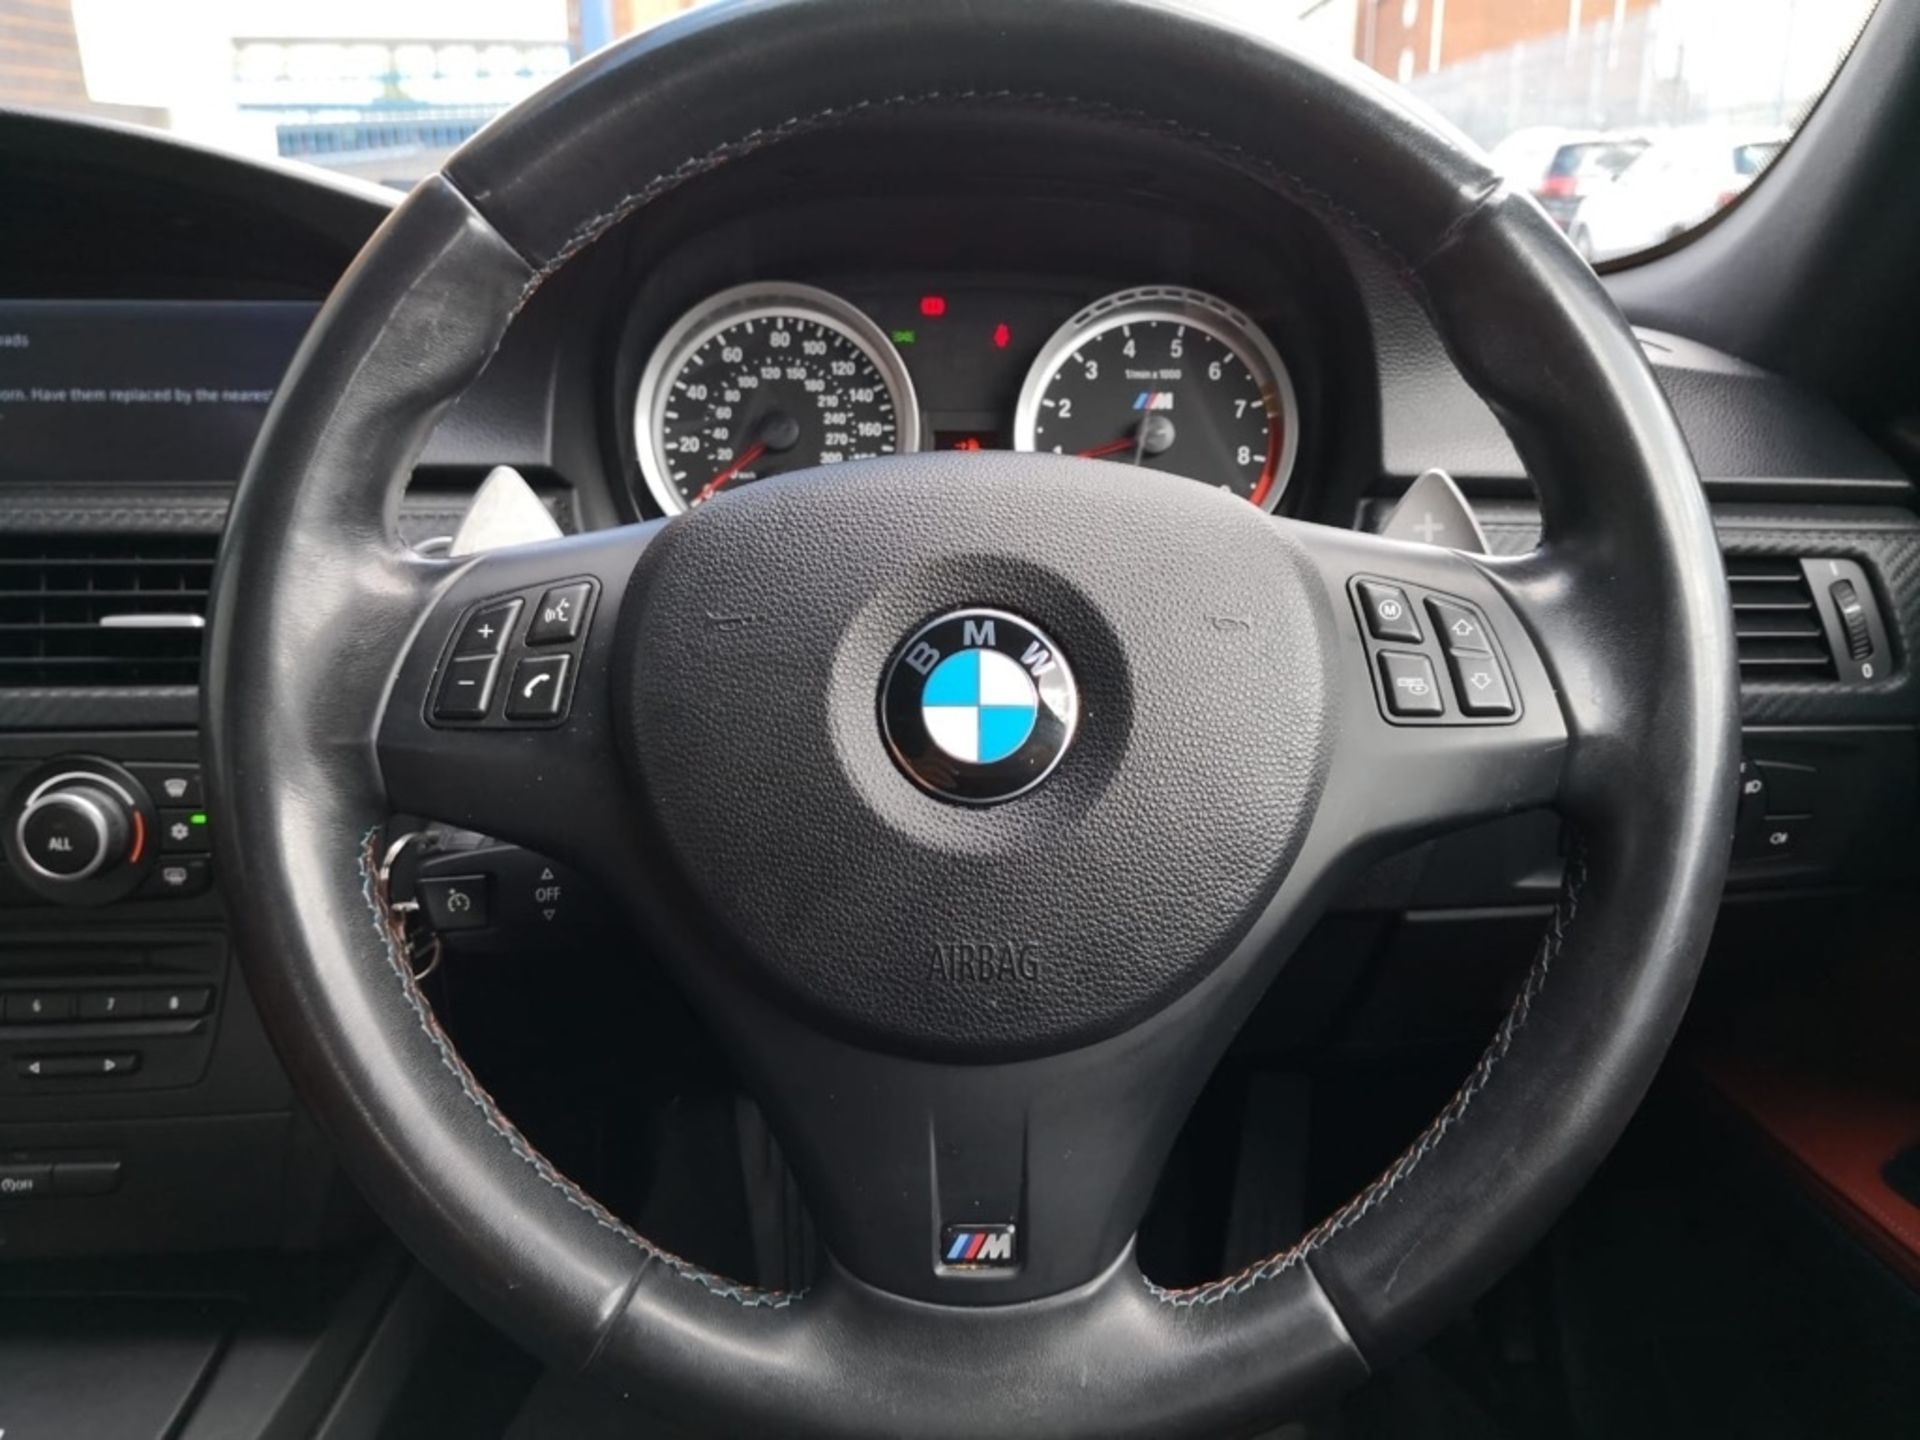 BMW 4.0 V8 M3 DCT – Automatic - Petrol – 2010 – White - 2 Keys- FDSH- Sat Nav Reg: A010 VNS – - Image 7 of 8